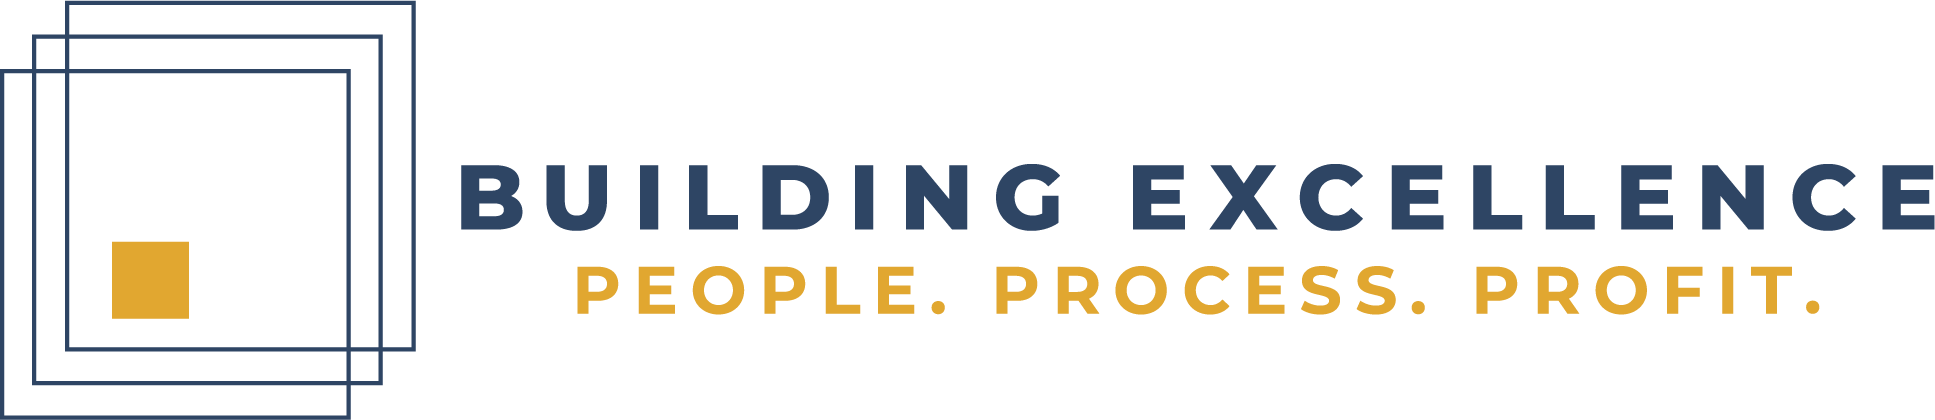 Building Excellence logo